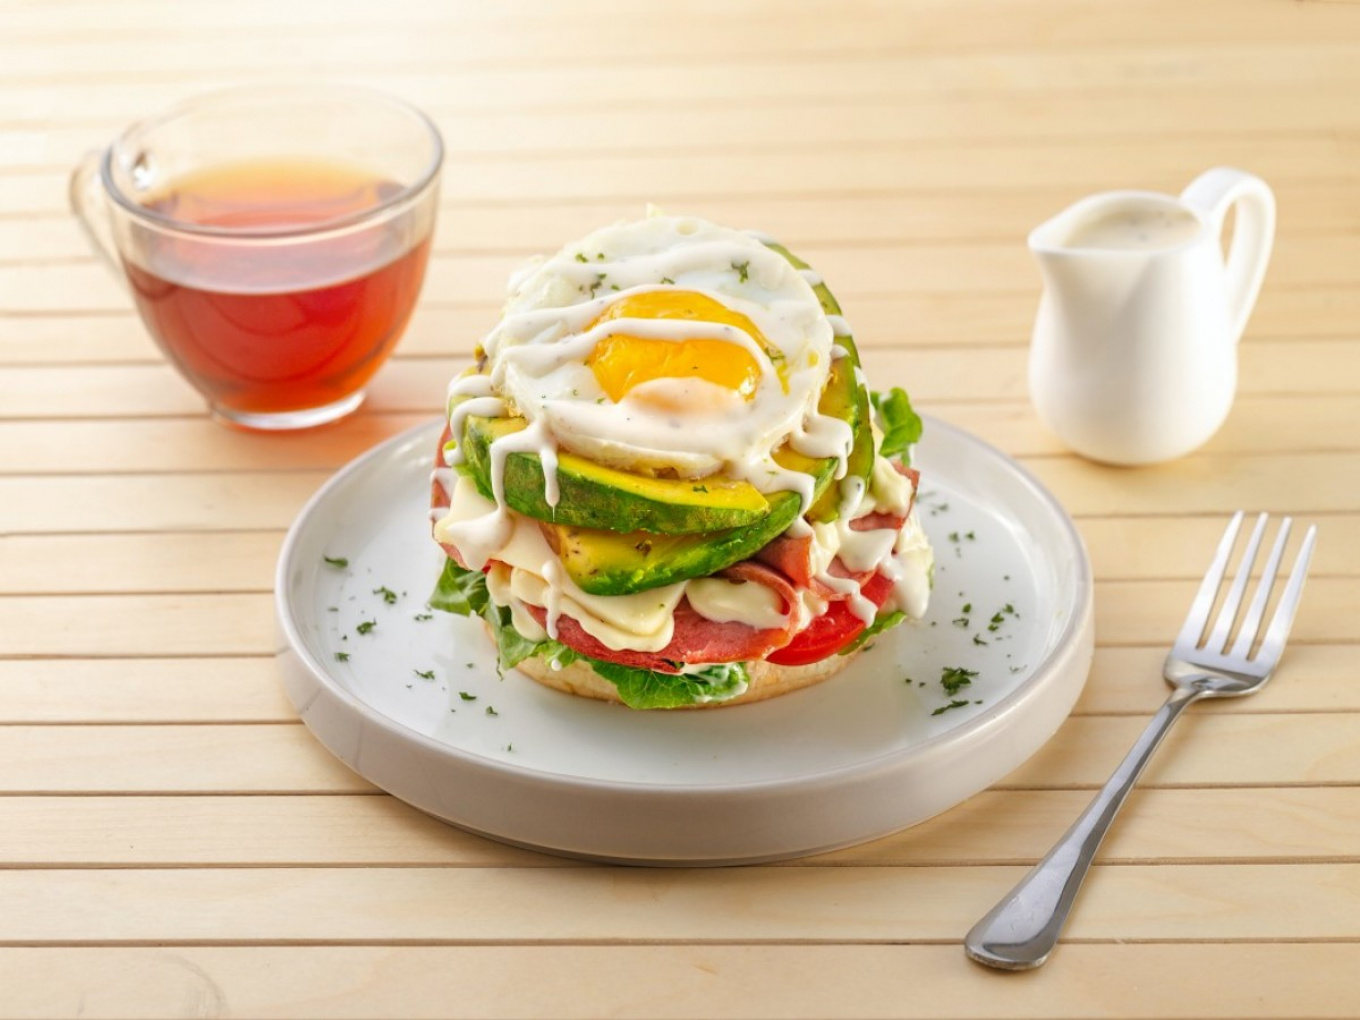 Avocado and Egg Sandwich